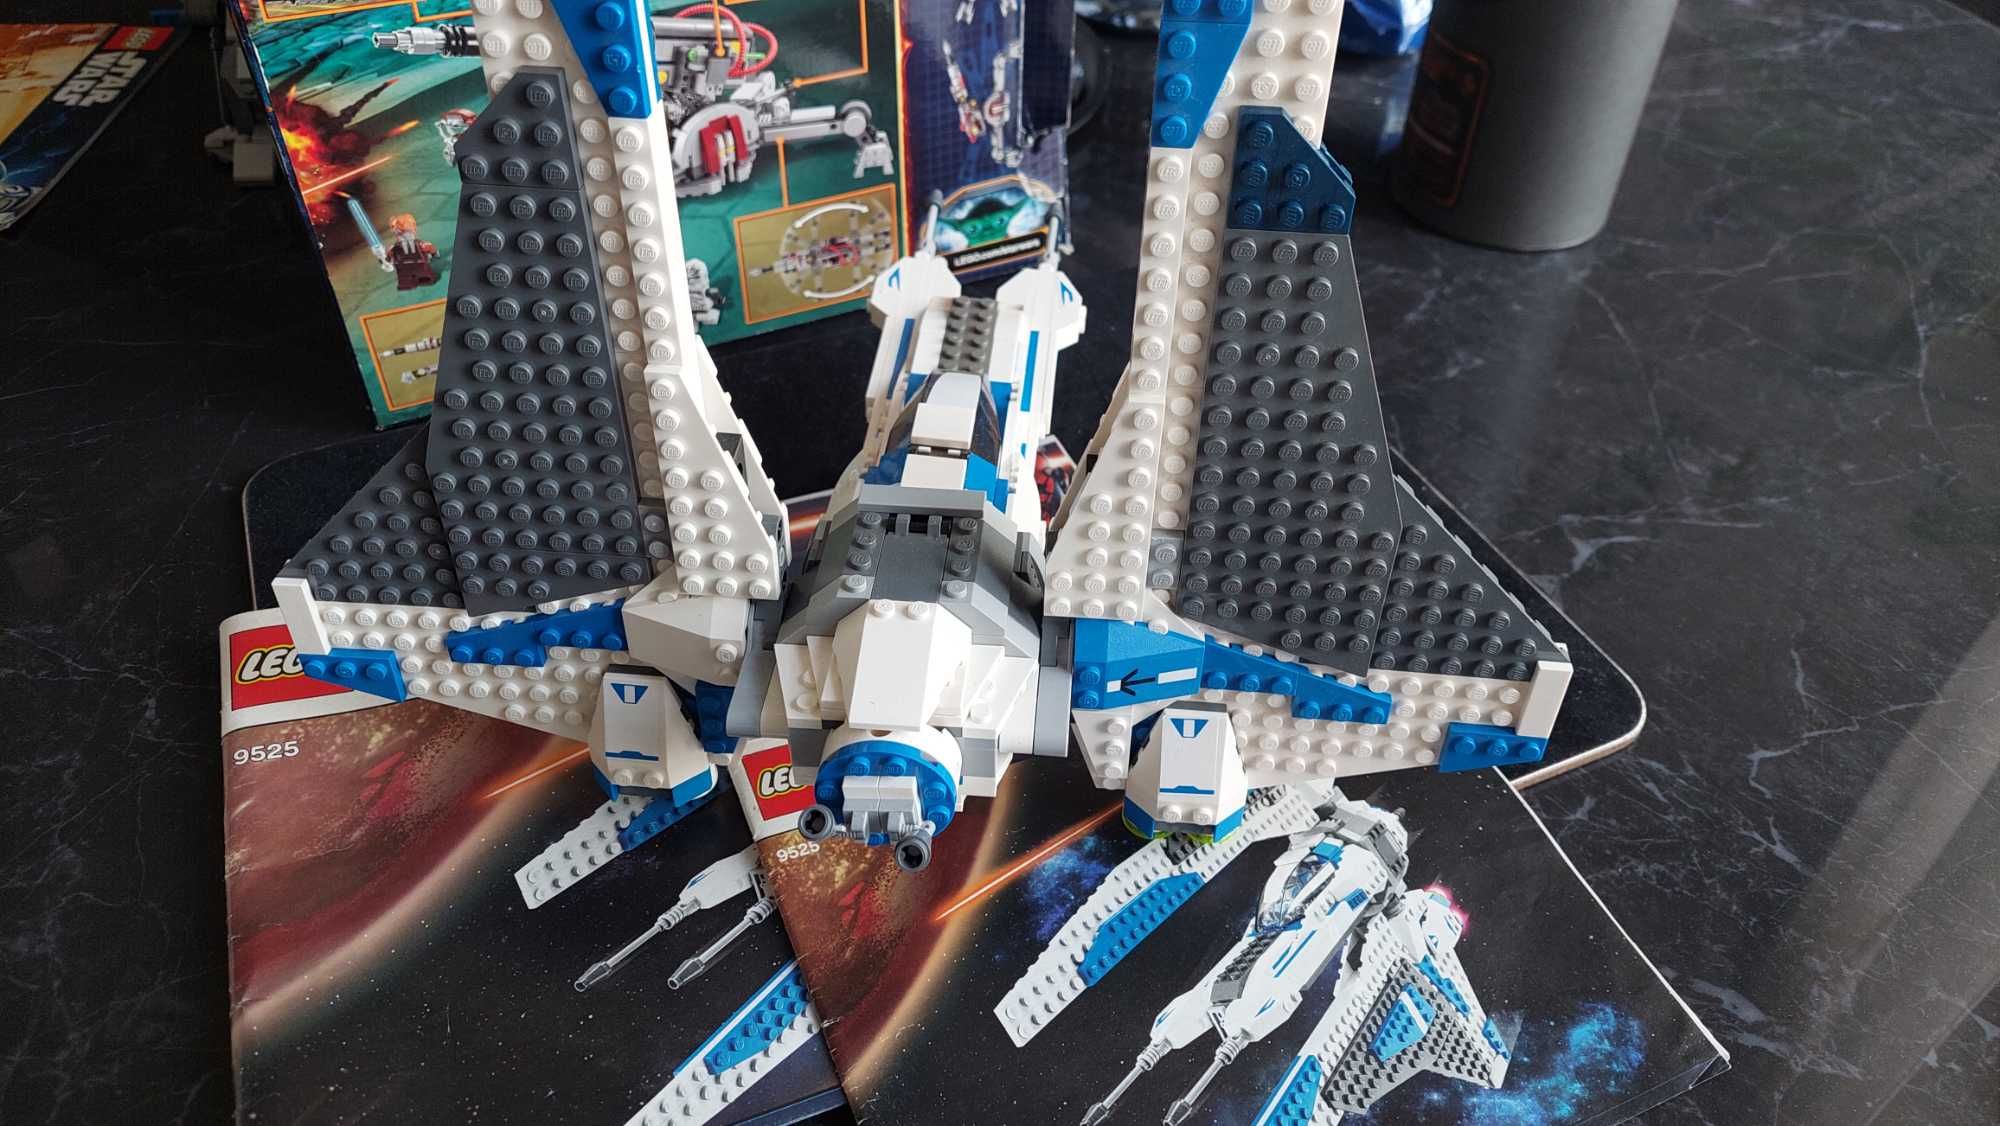 Lego Star Wars 9525 Mandalorian Starfighter